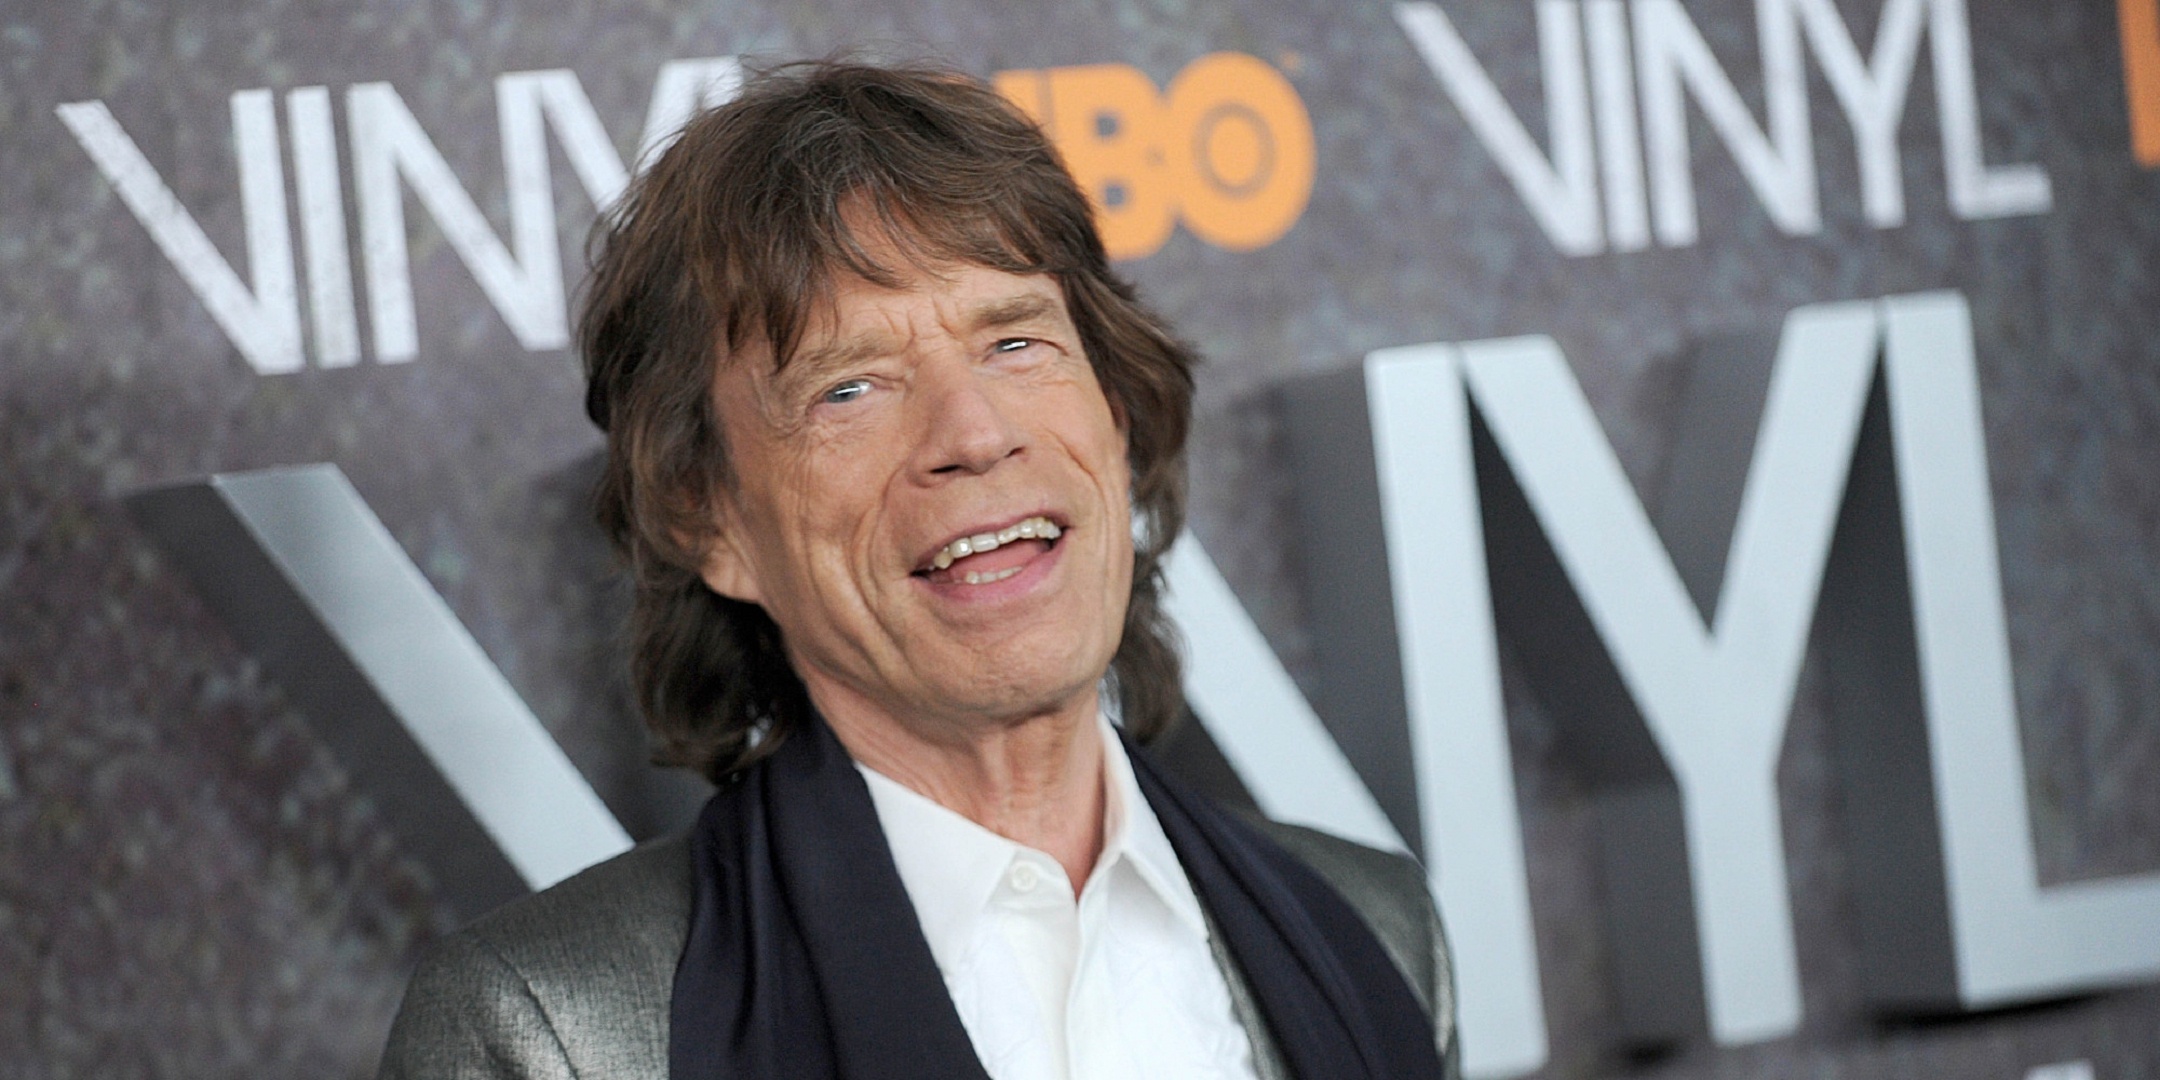 Mick Jagger, 4K wallpaper, High-definition image, Rock icon, 2160x1080 Dual Screen Desktop